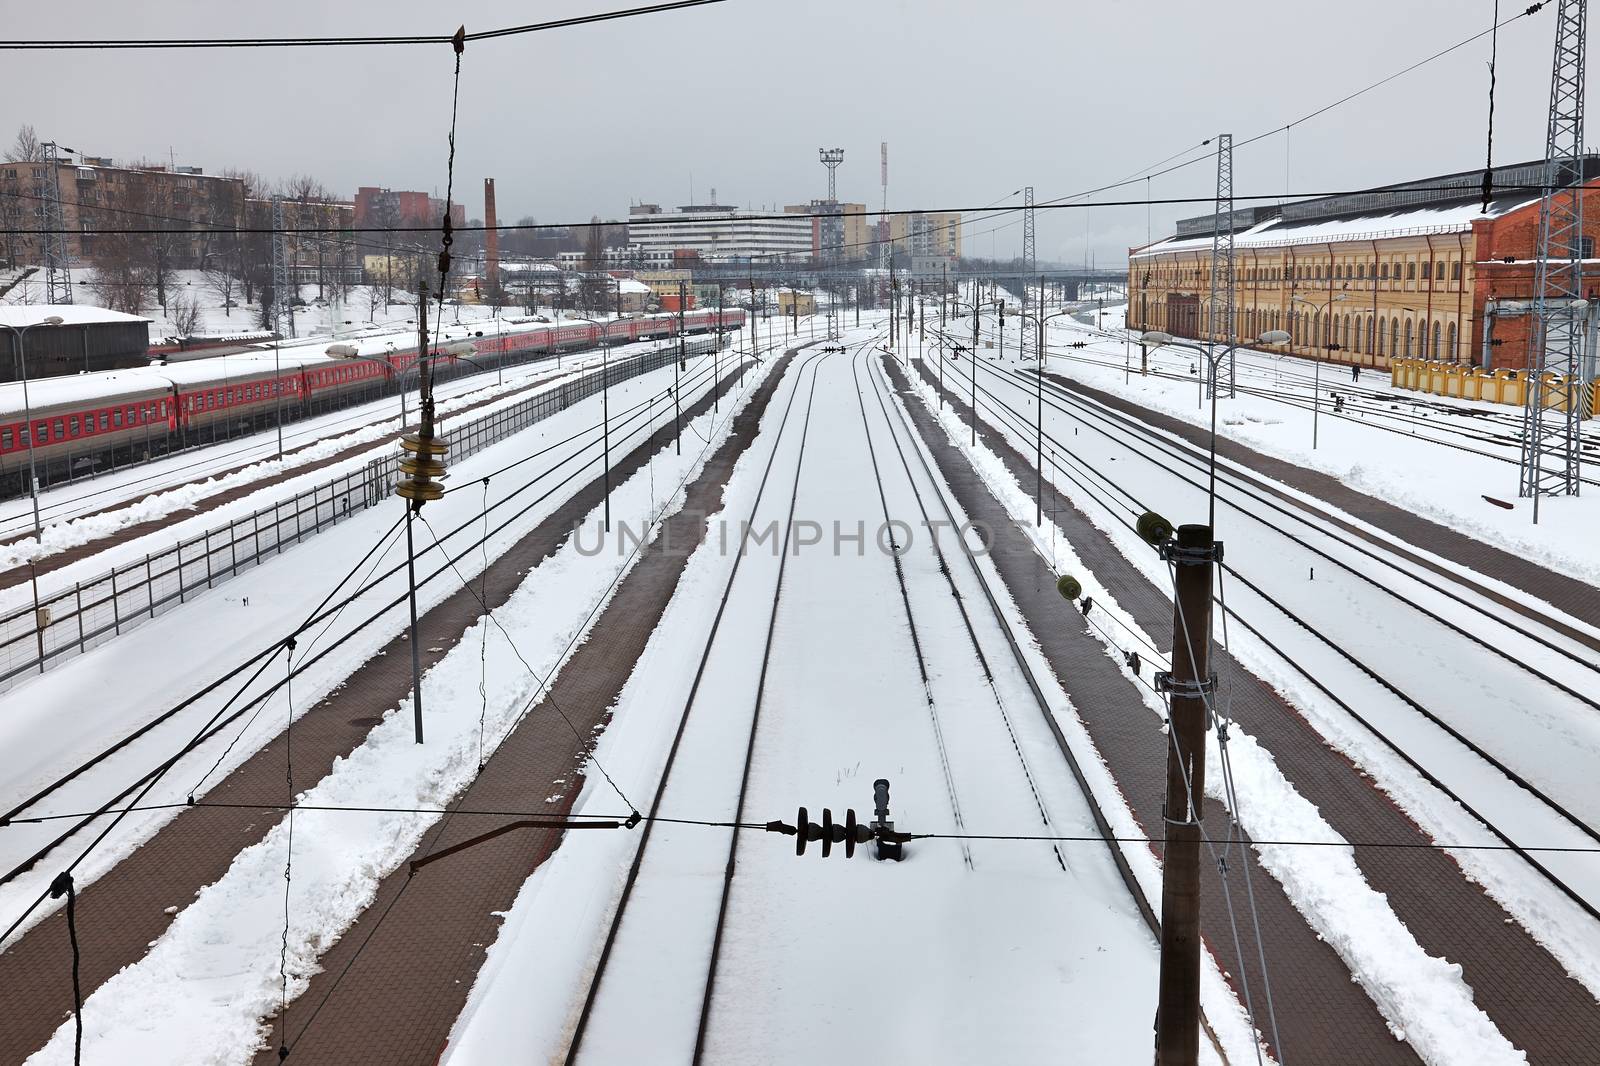 Railroad station tracks in winter